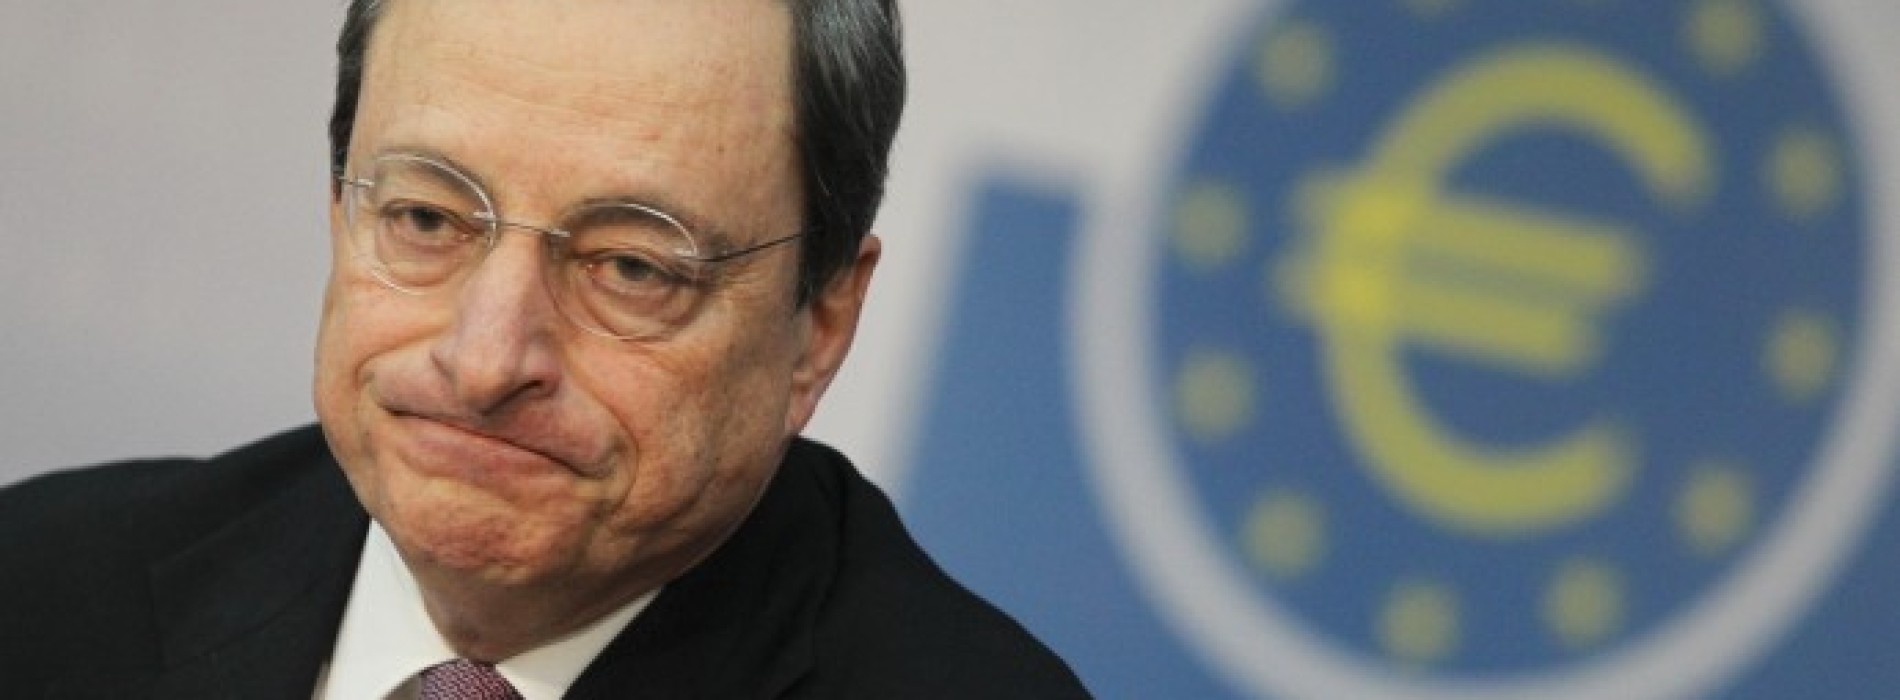 Draghi zapowiada reformy